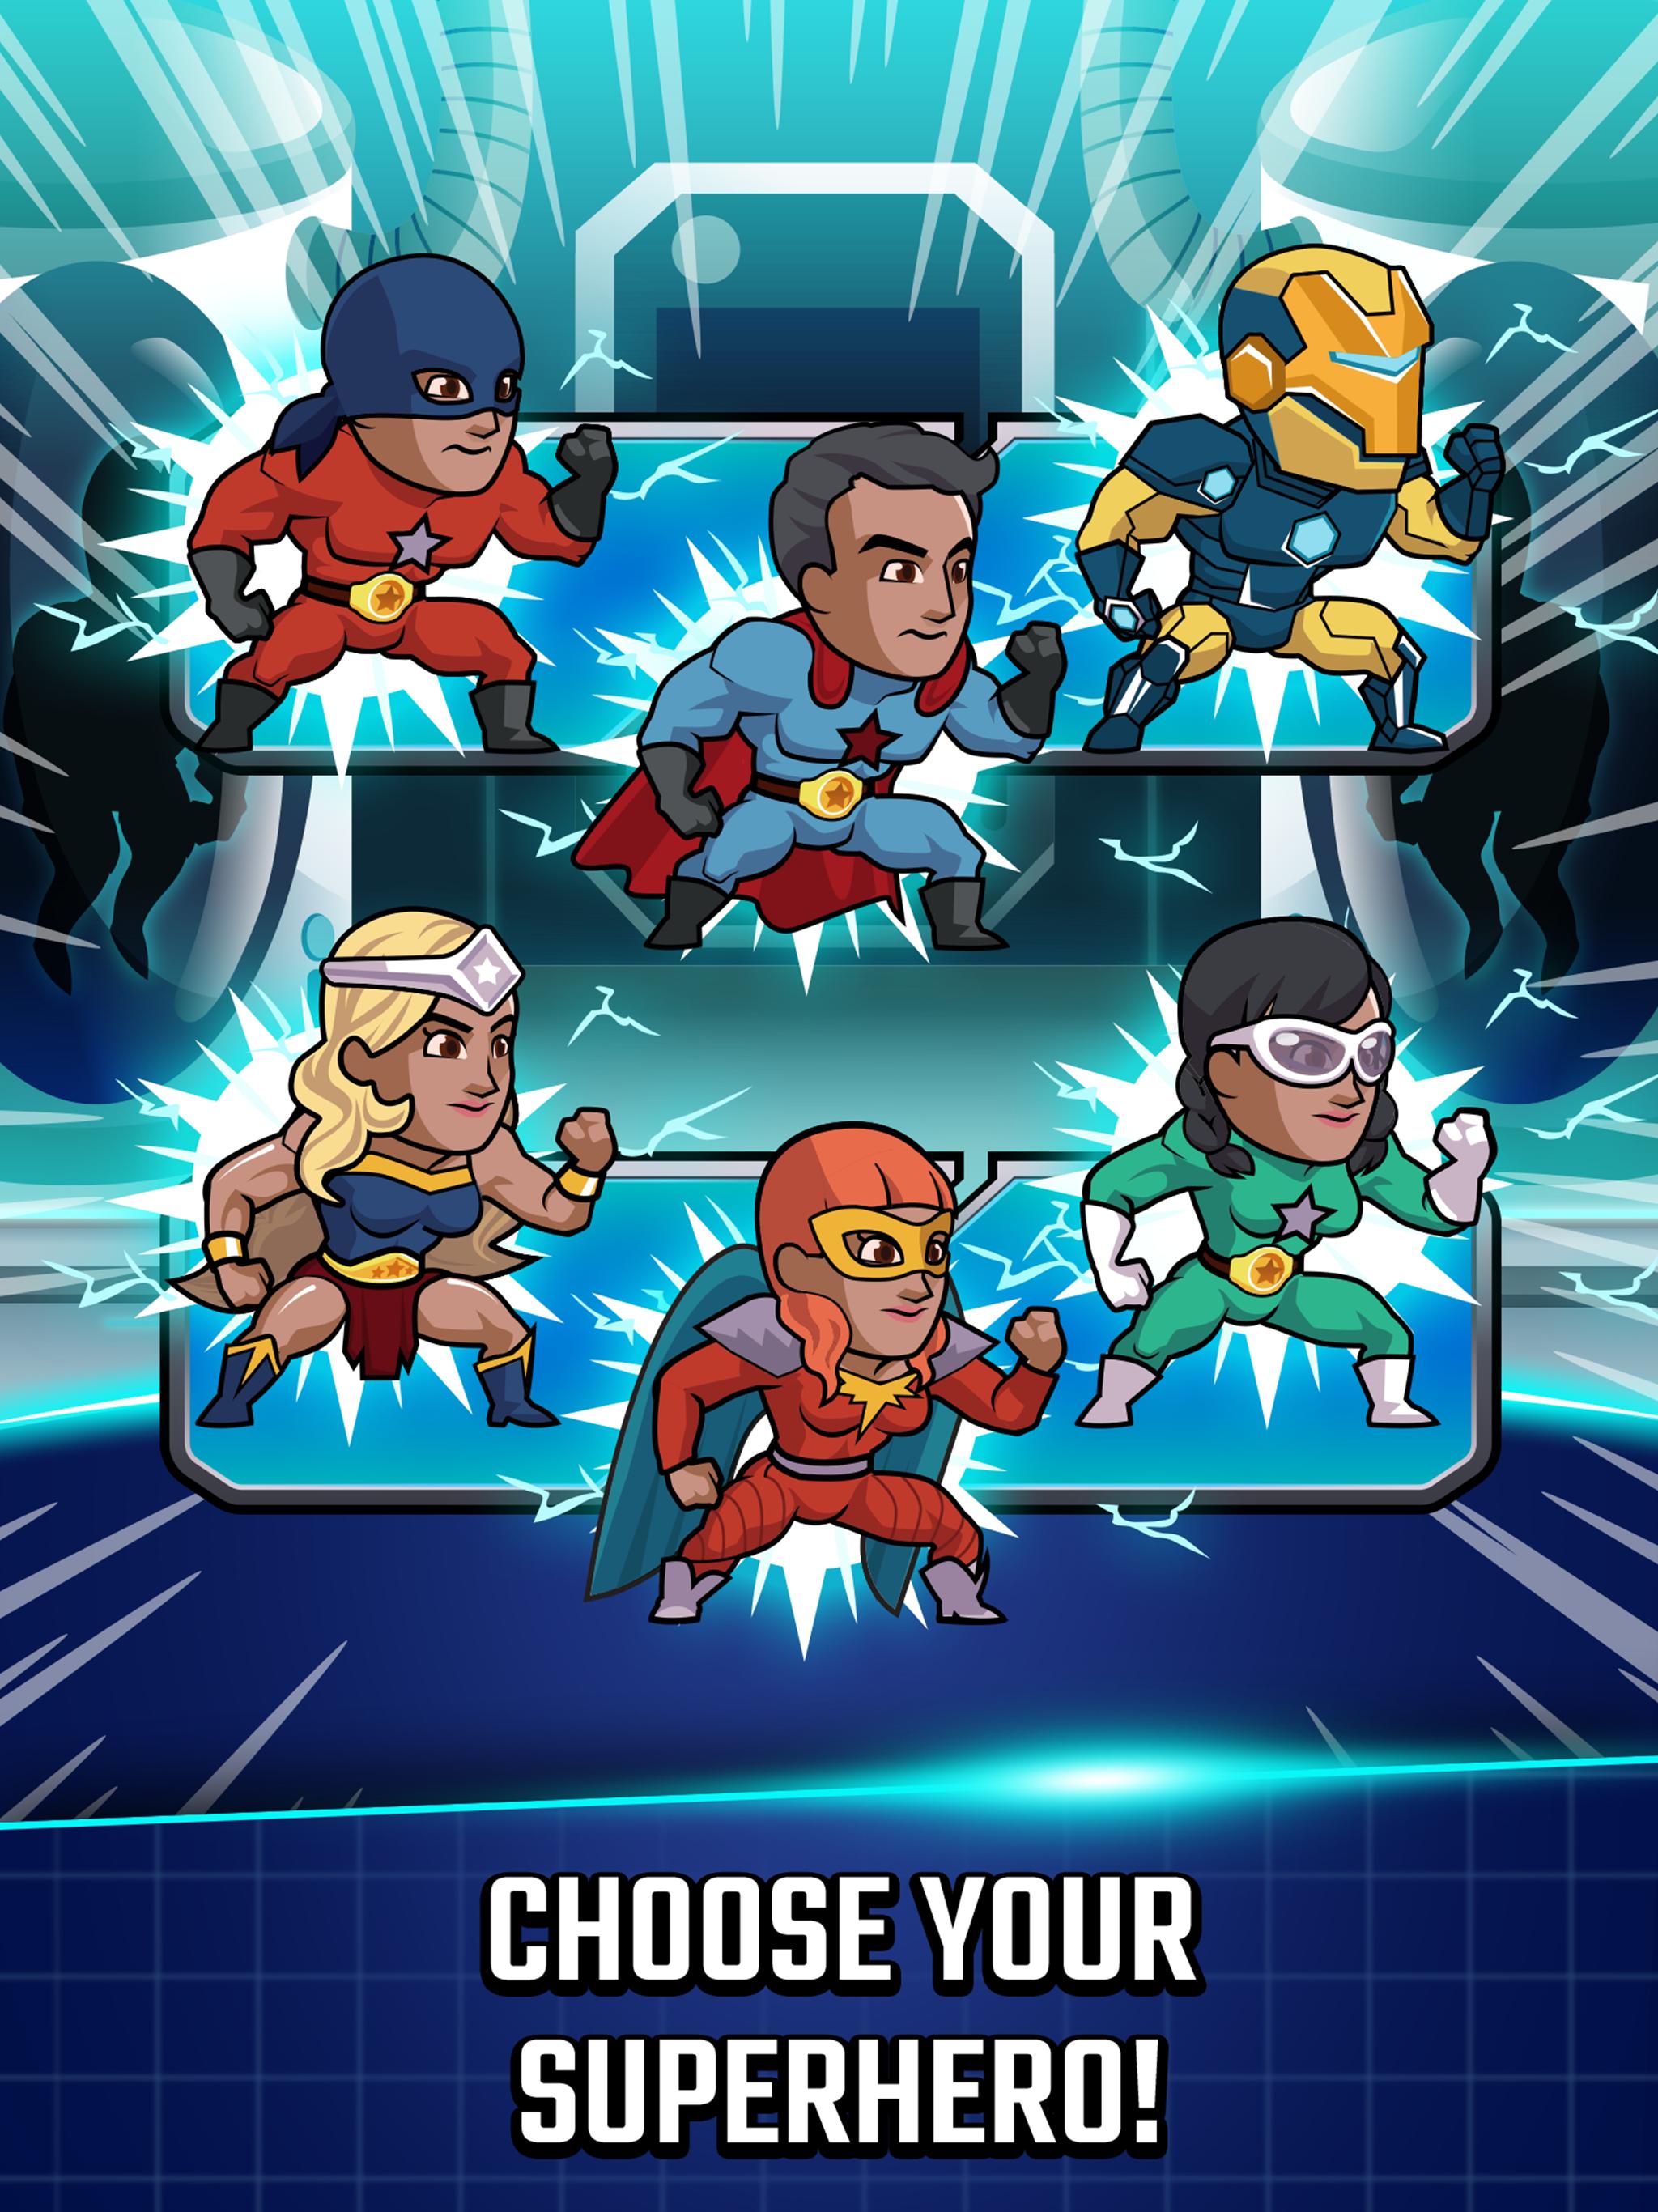 Super League of Heroes - Comic Book Champions 1.0.7 Screenshot 13